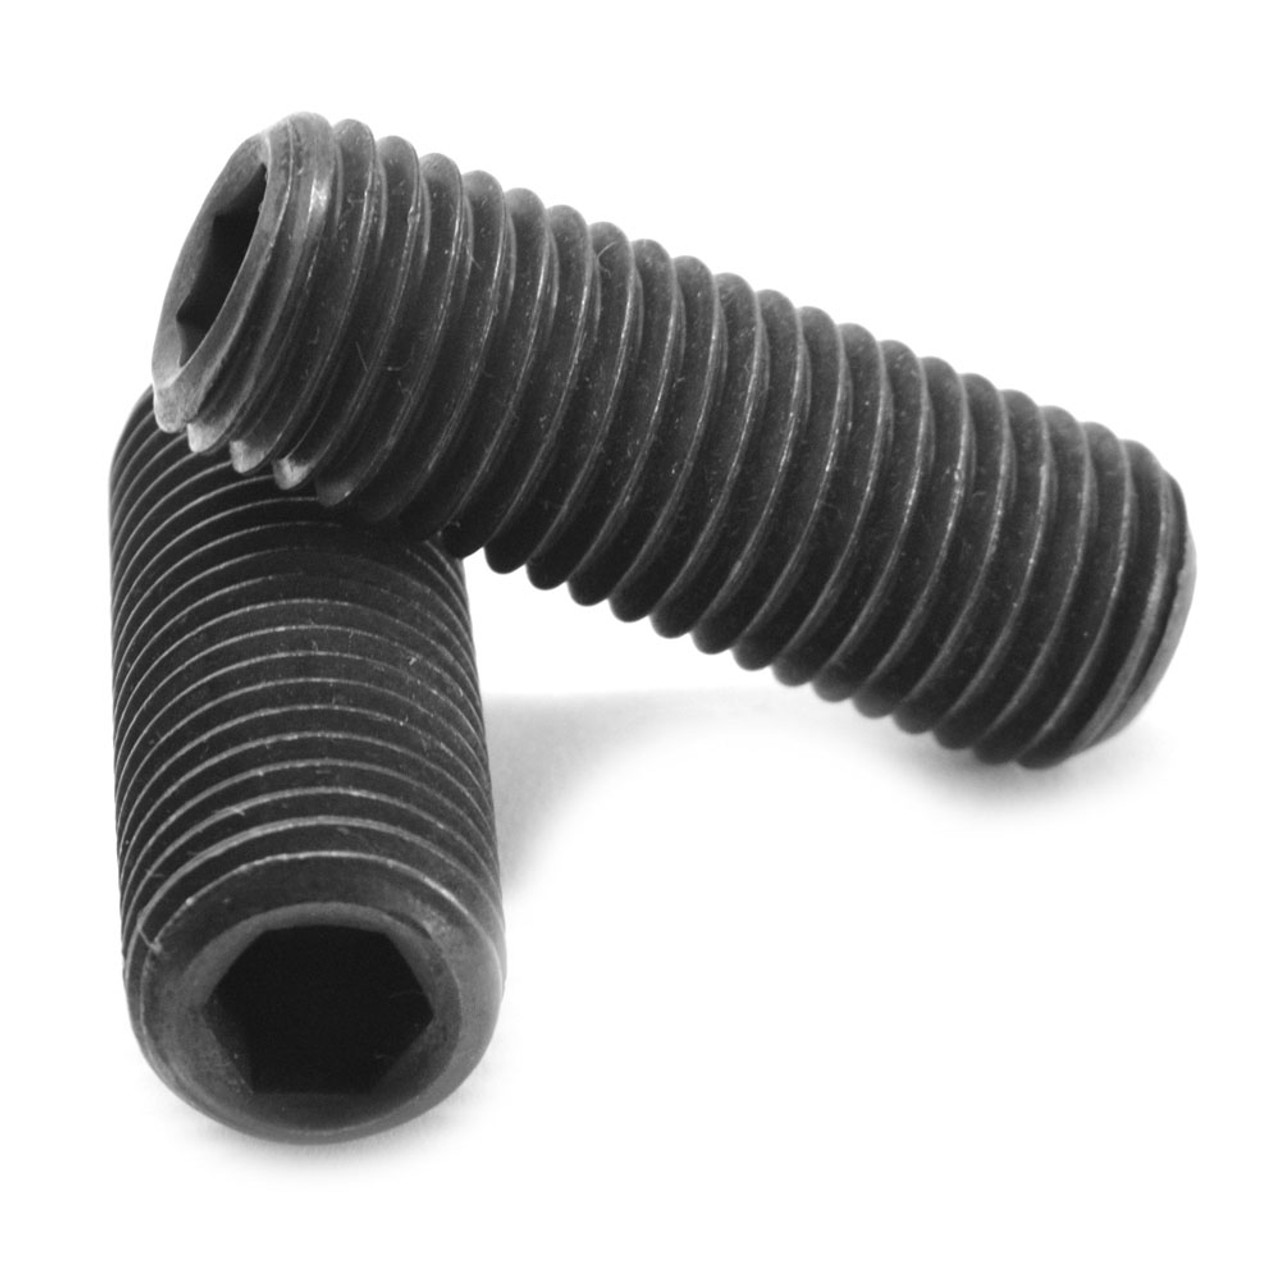 M5 x 0.80 x 35 MM Coarse Thread ISO 4029 / DIN 916 Class 45H Socket Set Screw Cup Point Alloy Steel Black Oxide